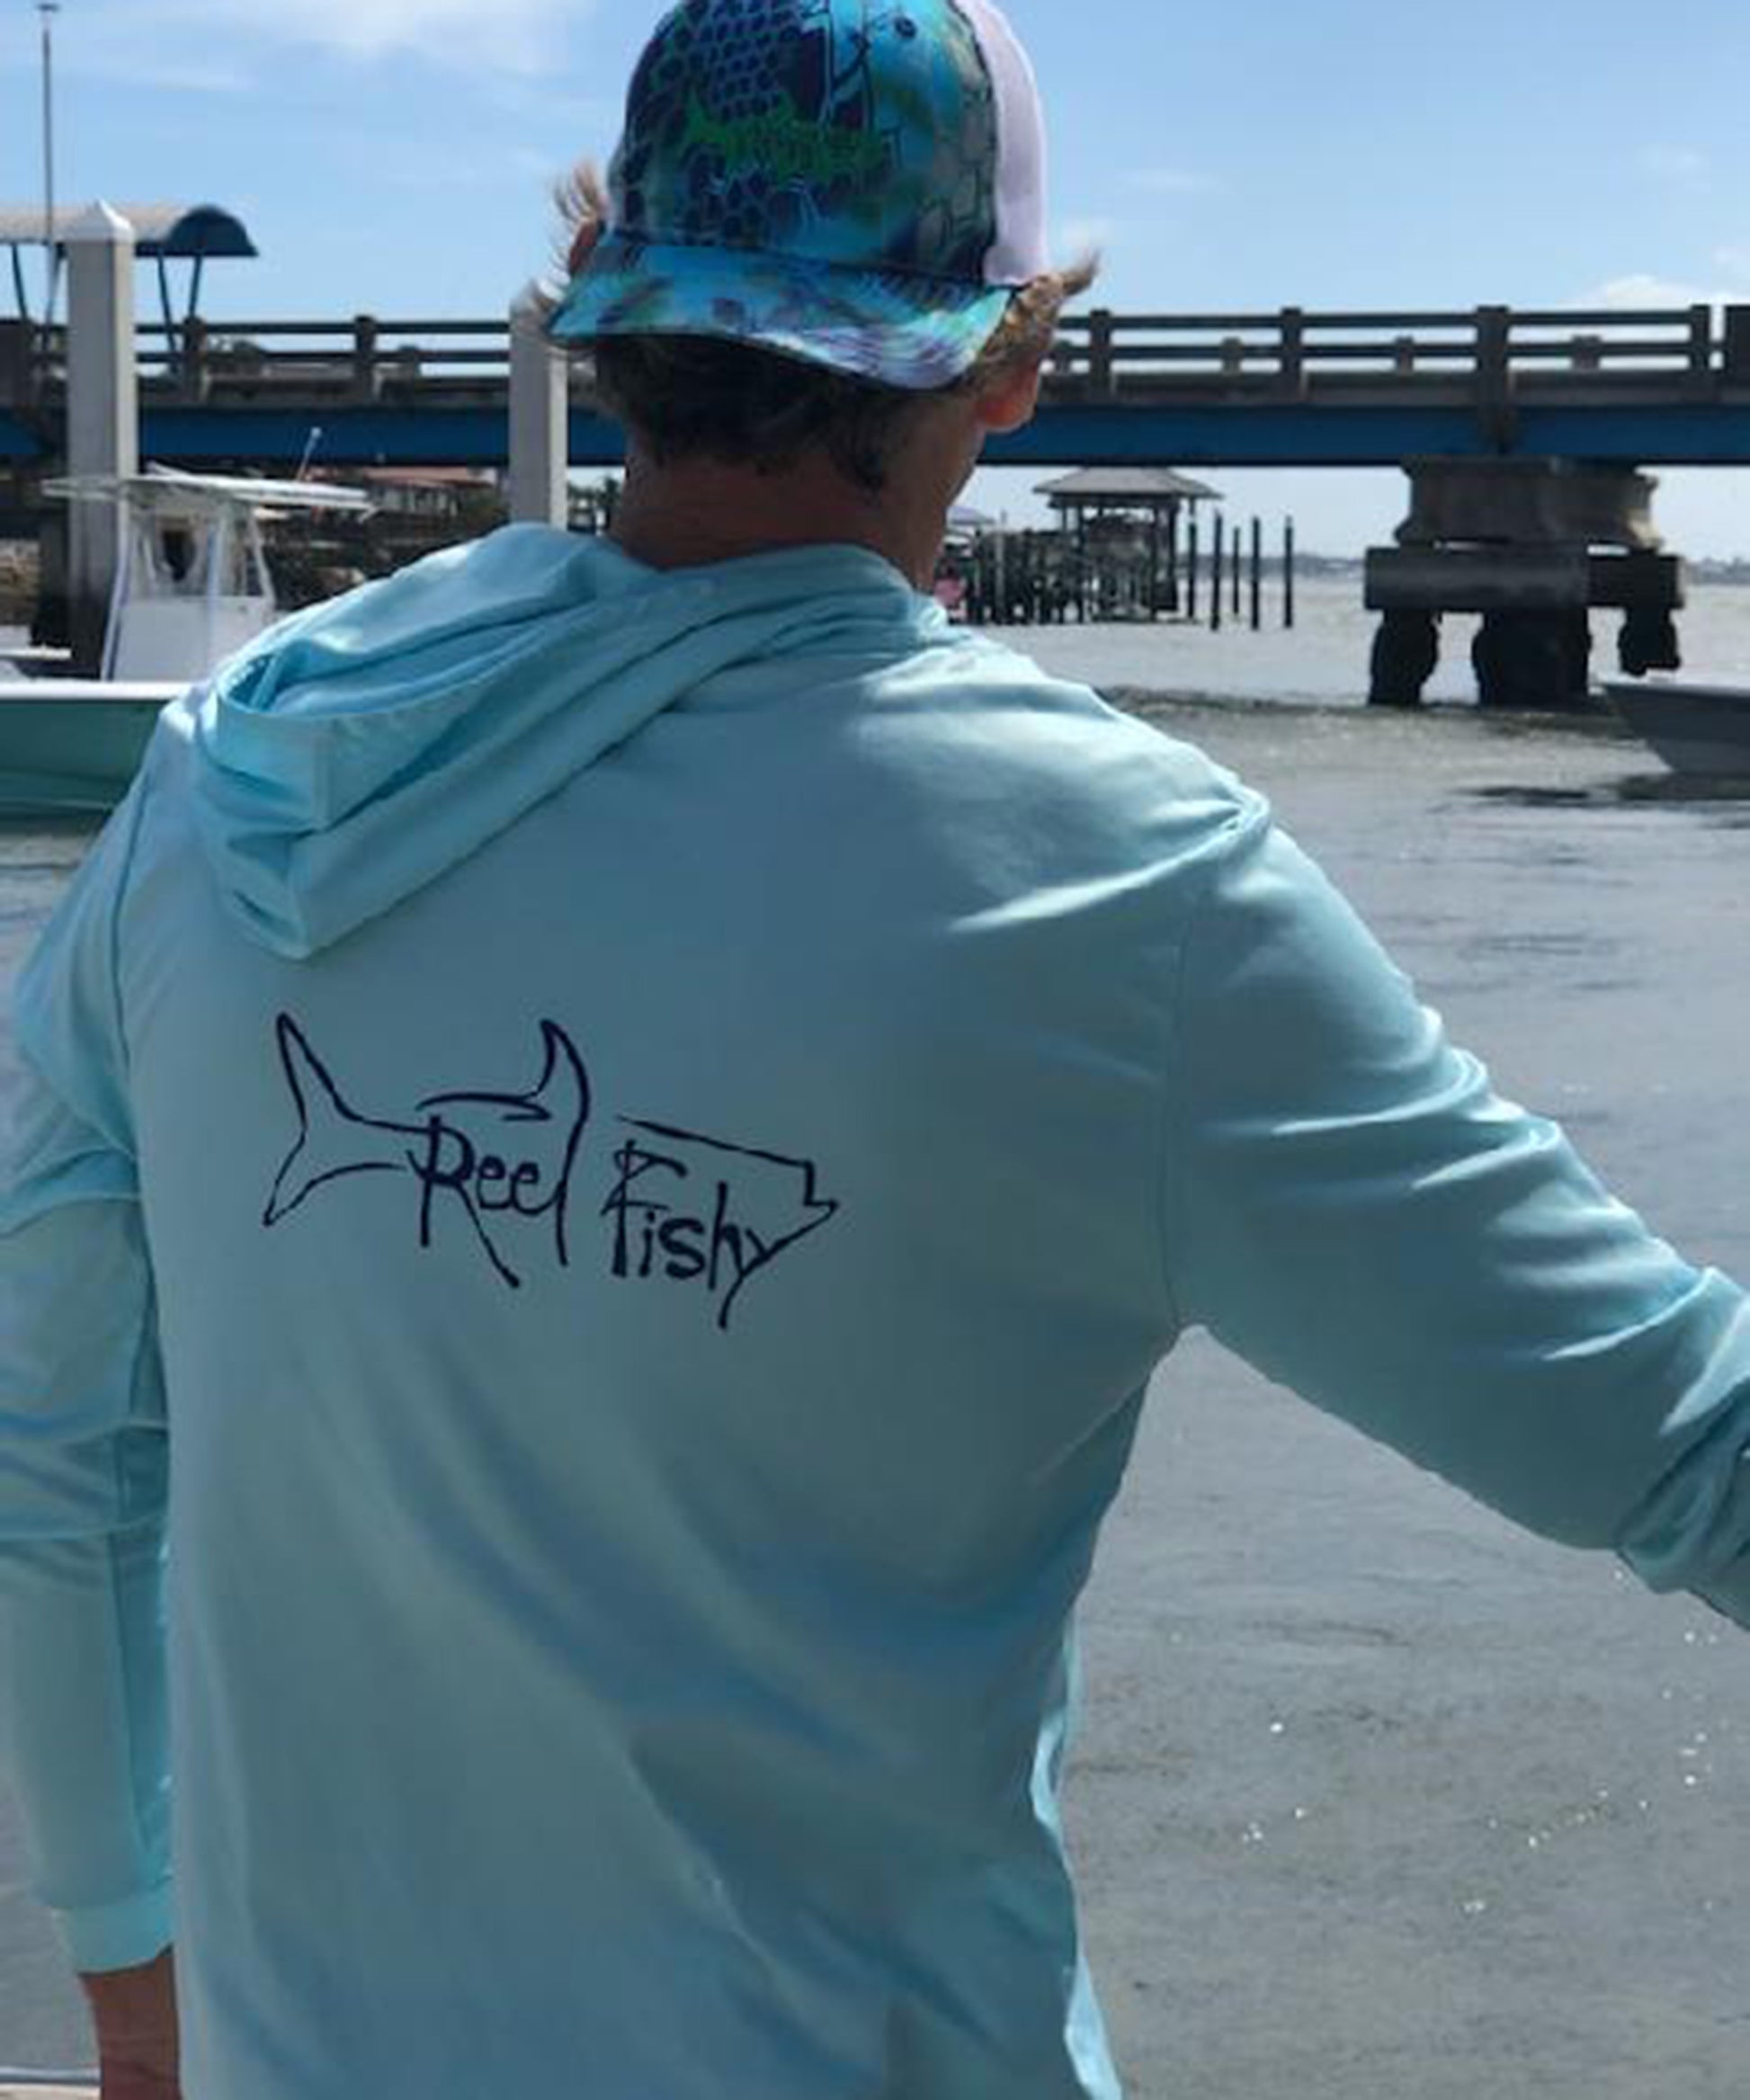 Tarpon Performance Hoodie Fishing Shirts, 50+Upf Sun Protection - Reel Fishy Apparel L / Lt. Gray Hoodie L/S - unisex